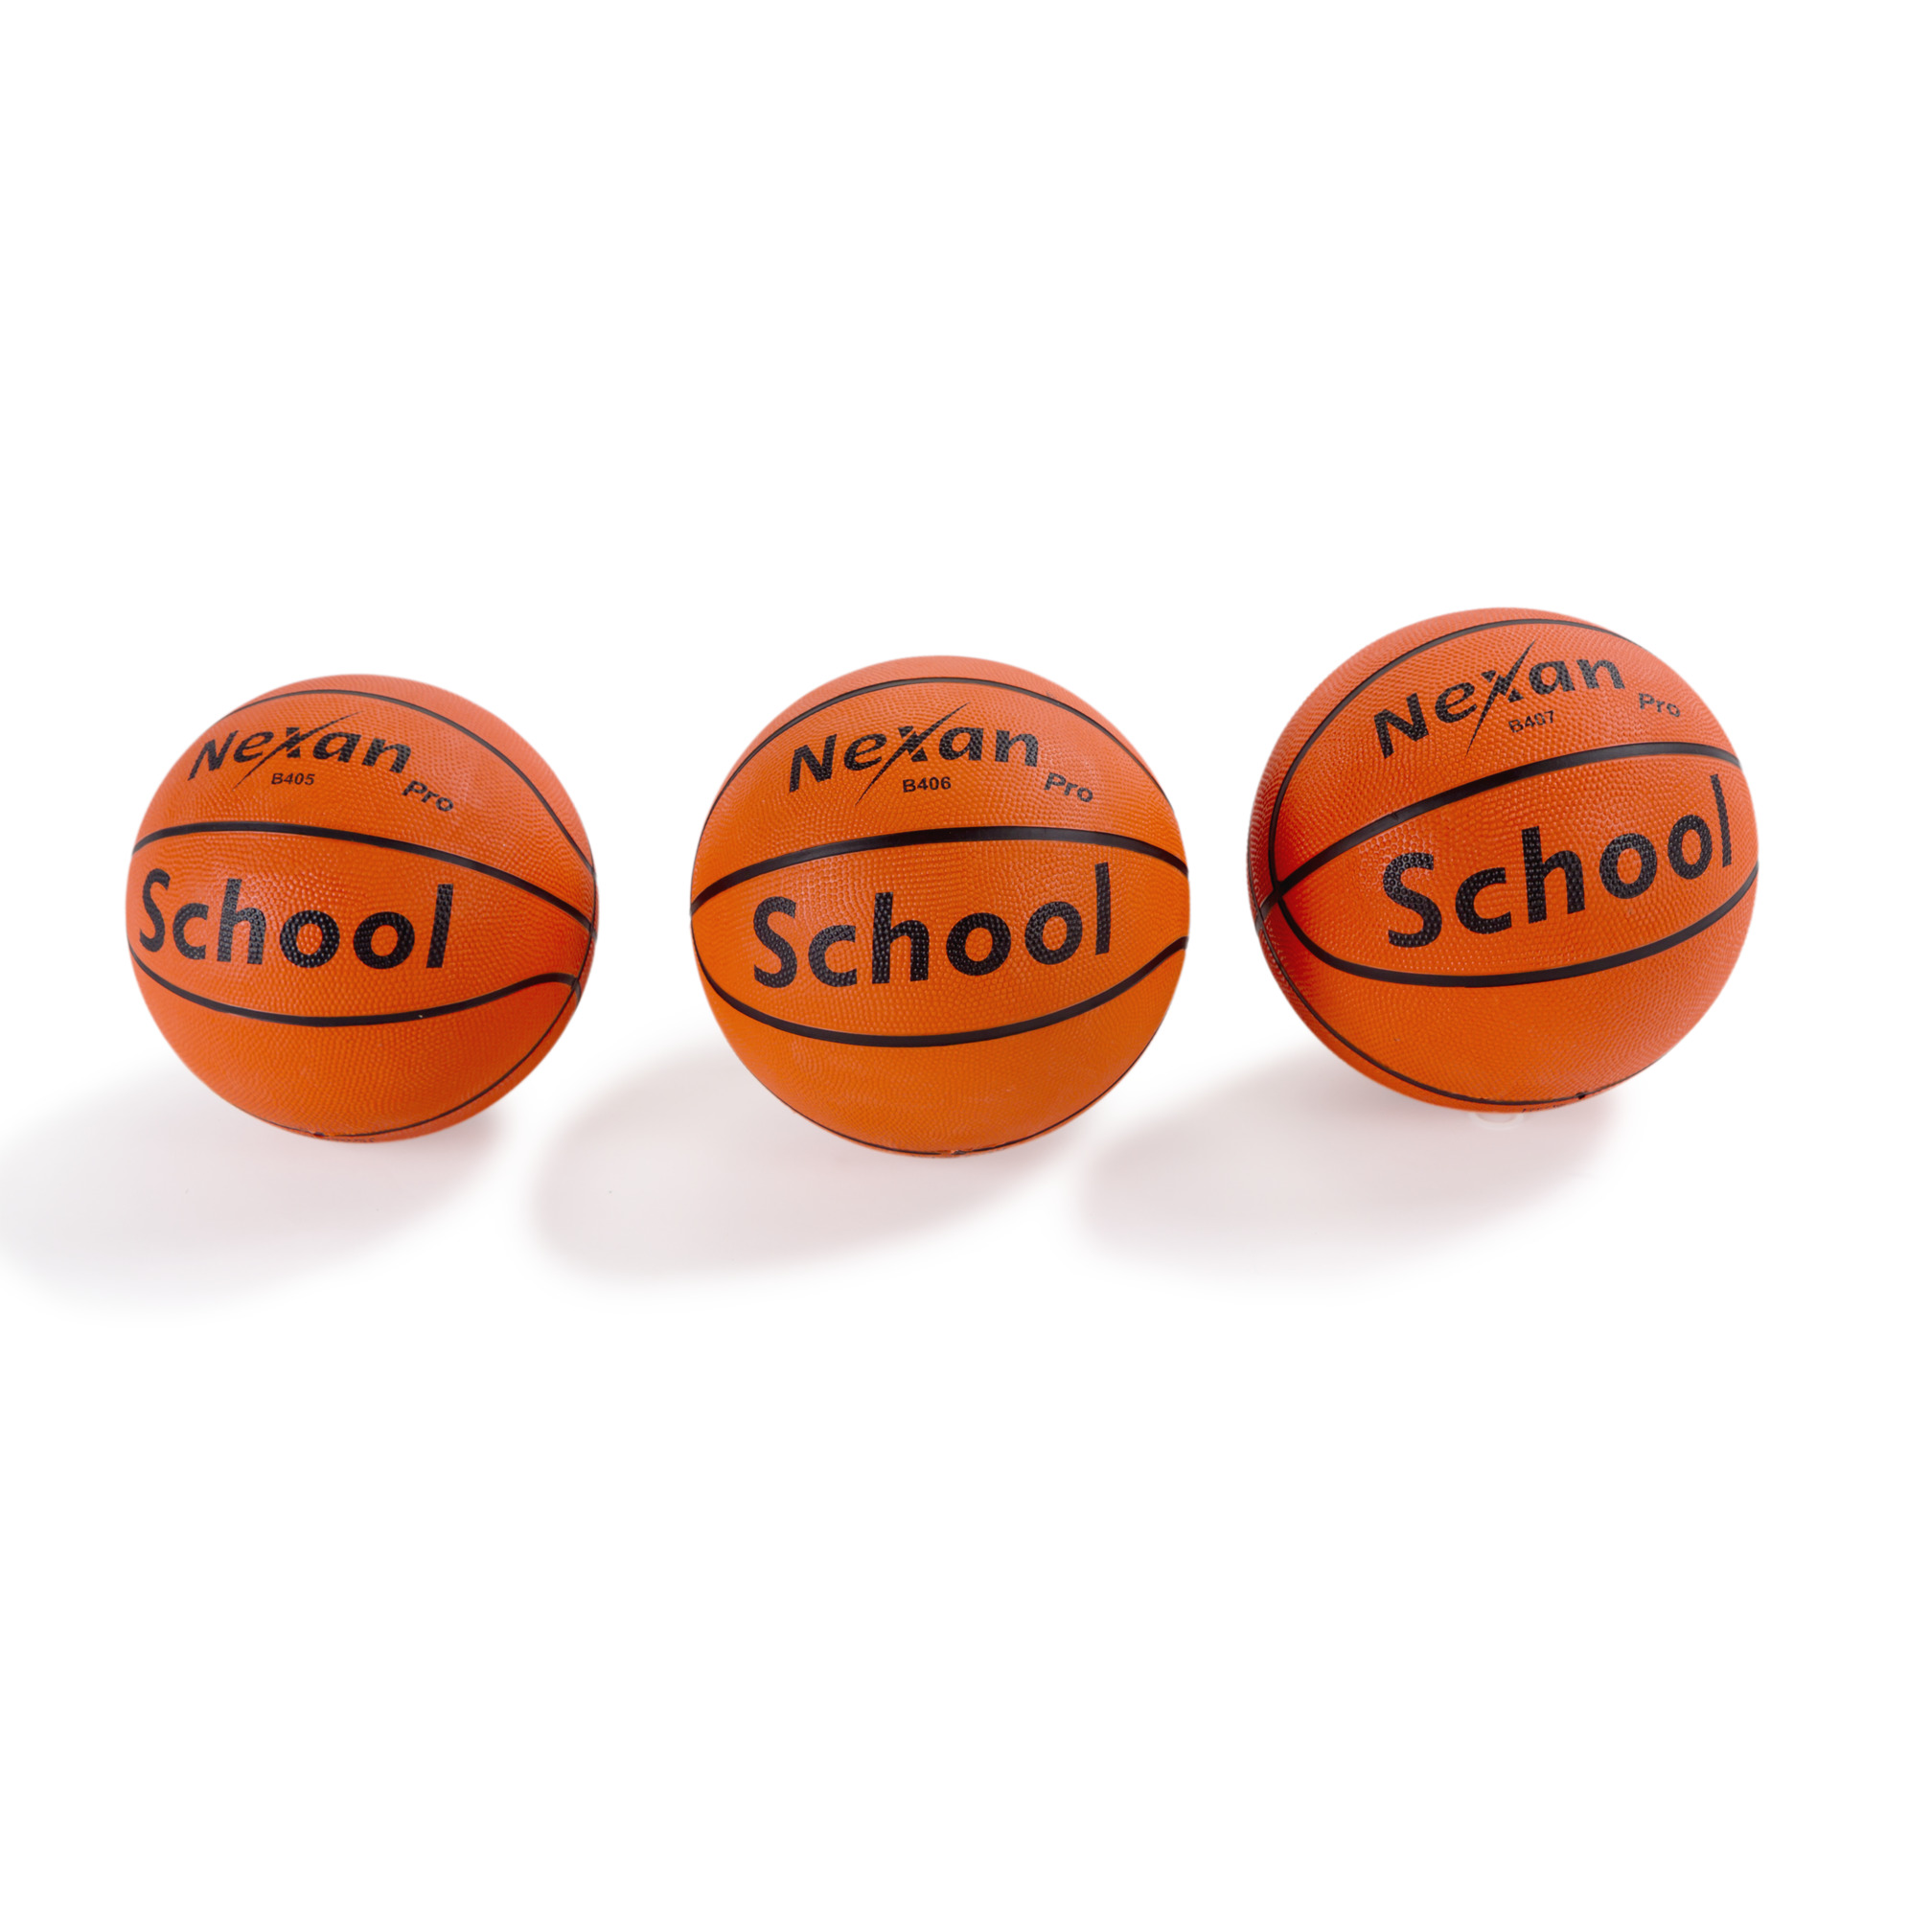 Nexan Basketball SCHOOL, Größe 7